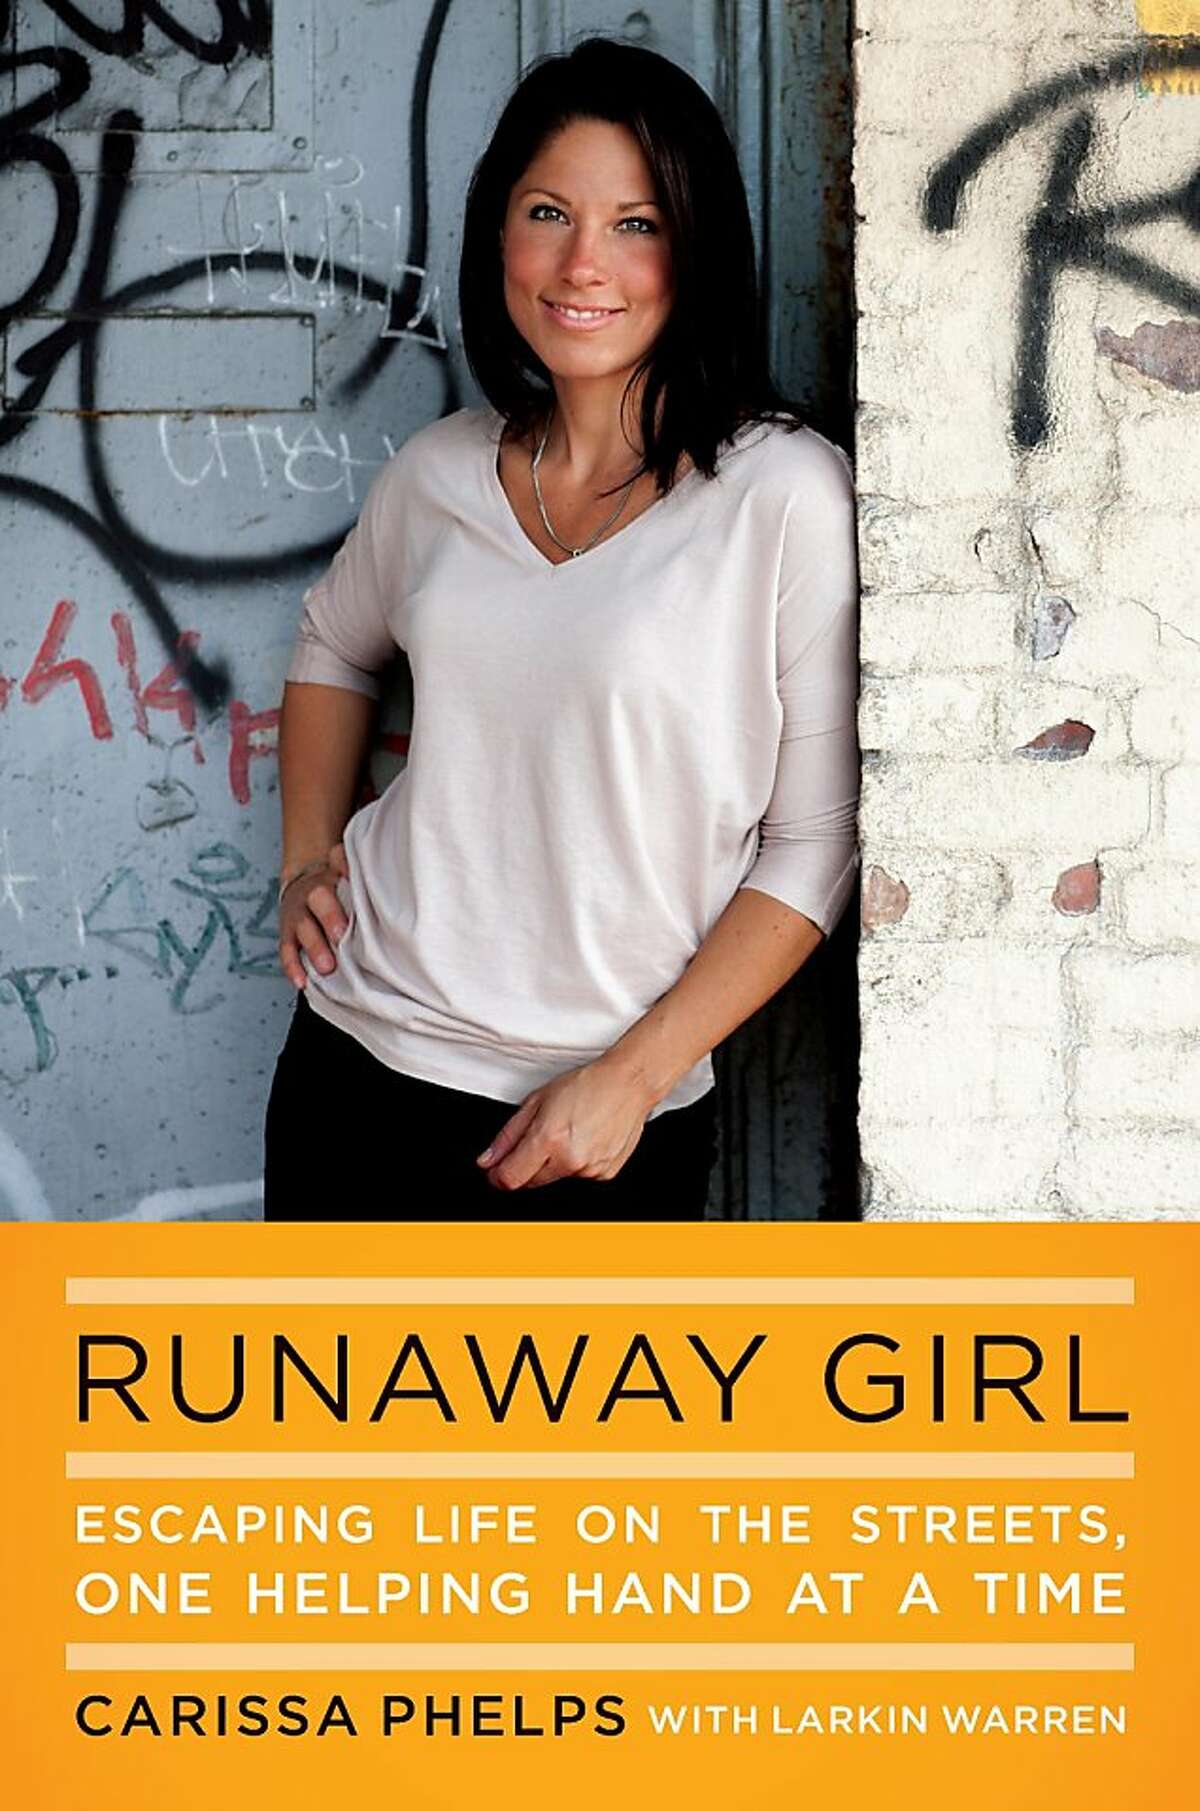 Runaway Girl, by Carissa Phelps